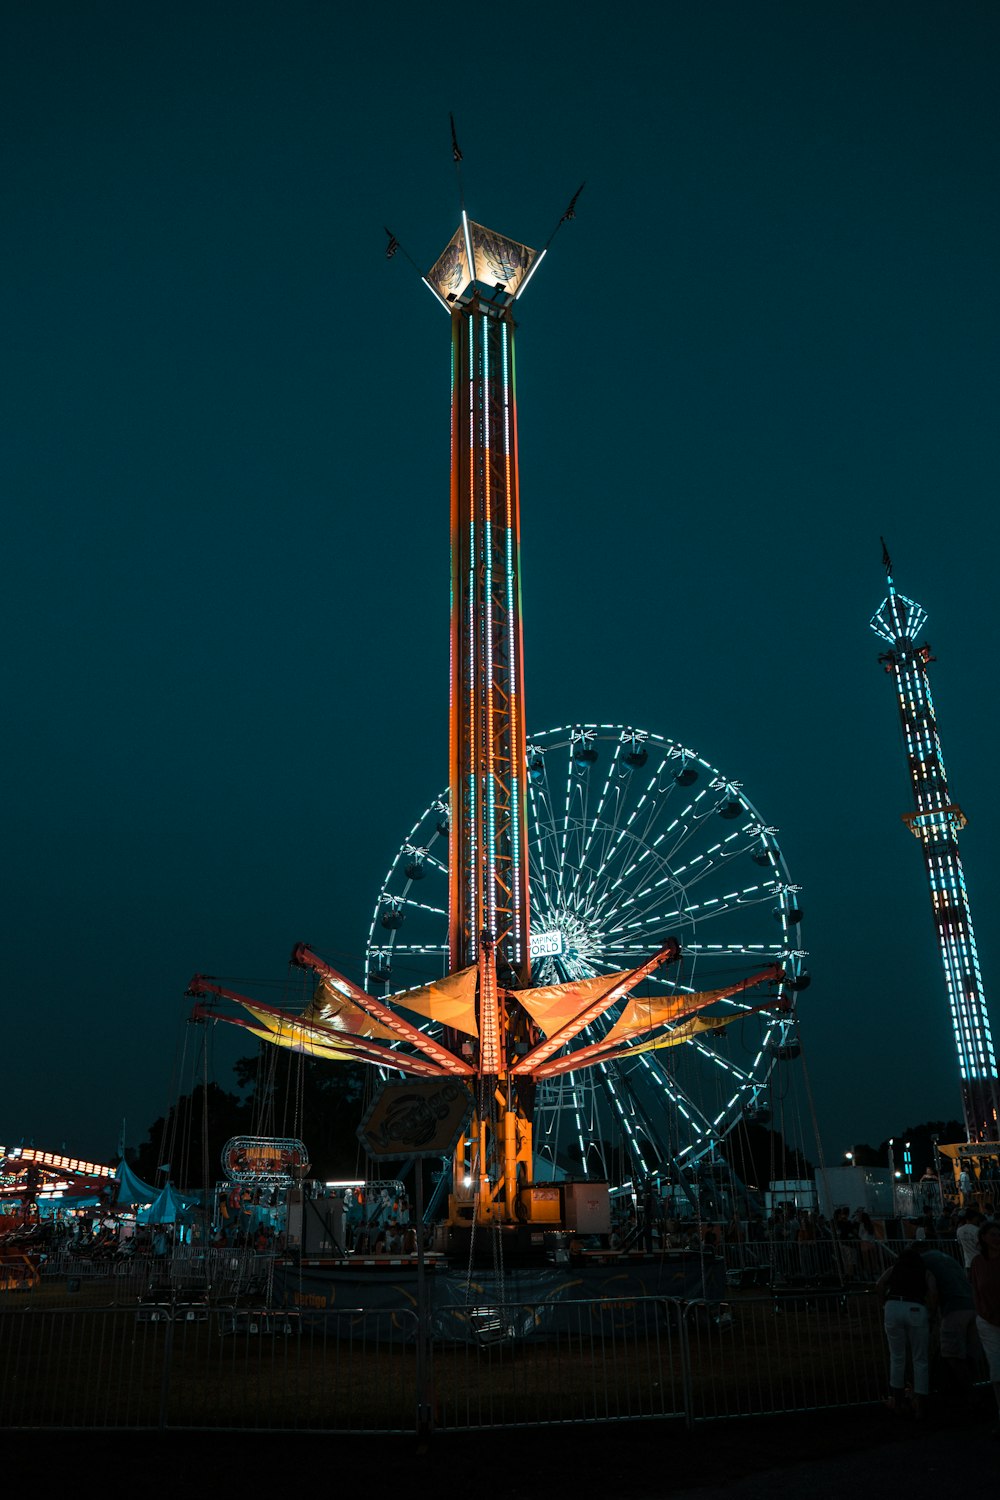 lighted Ferris wheel during nighttime